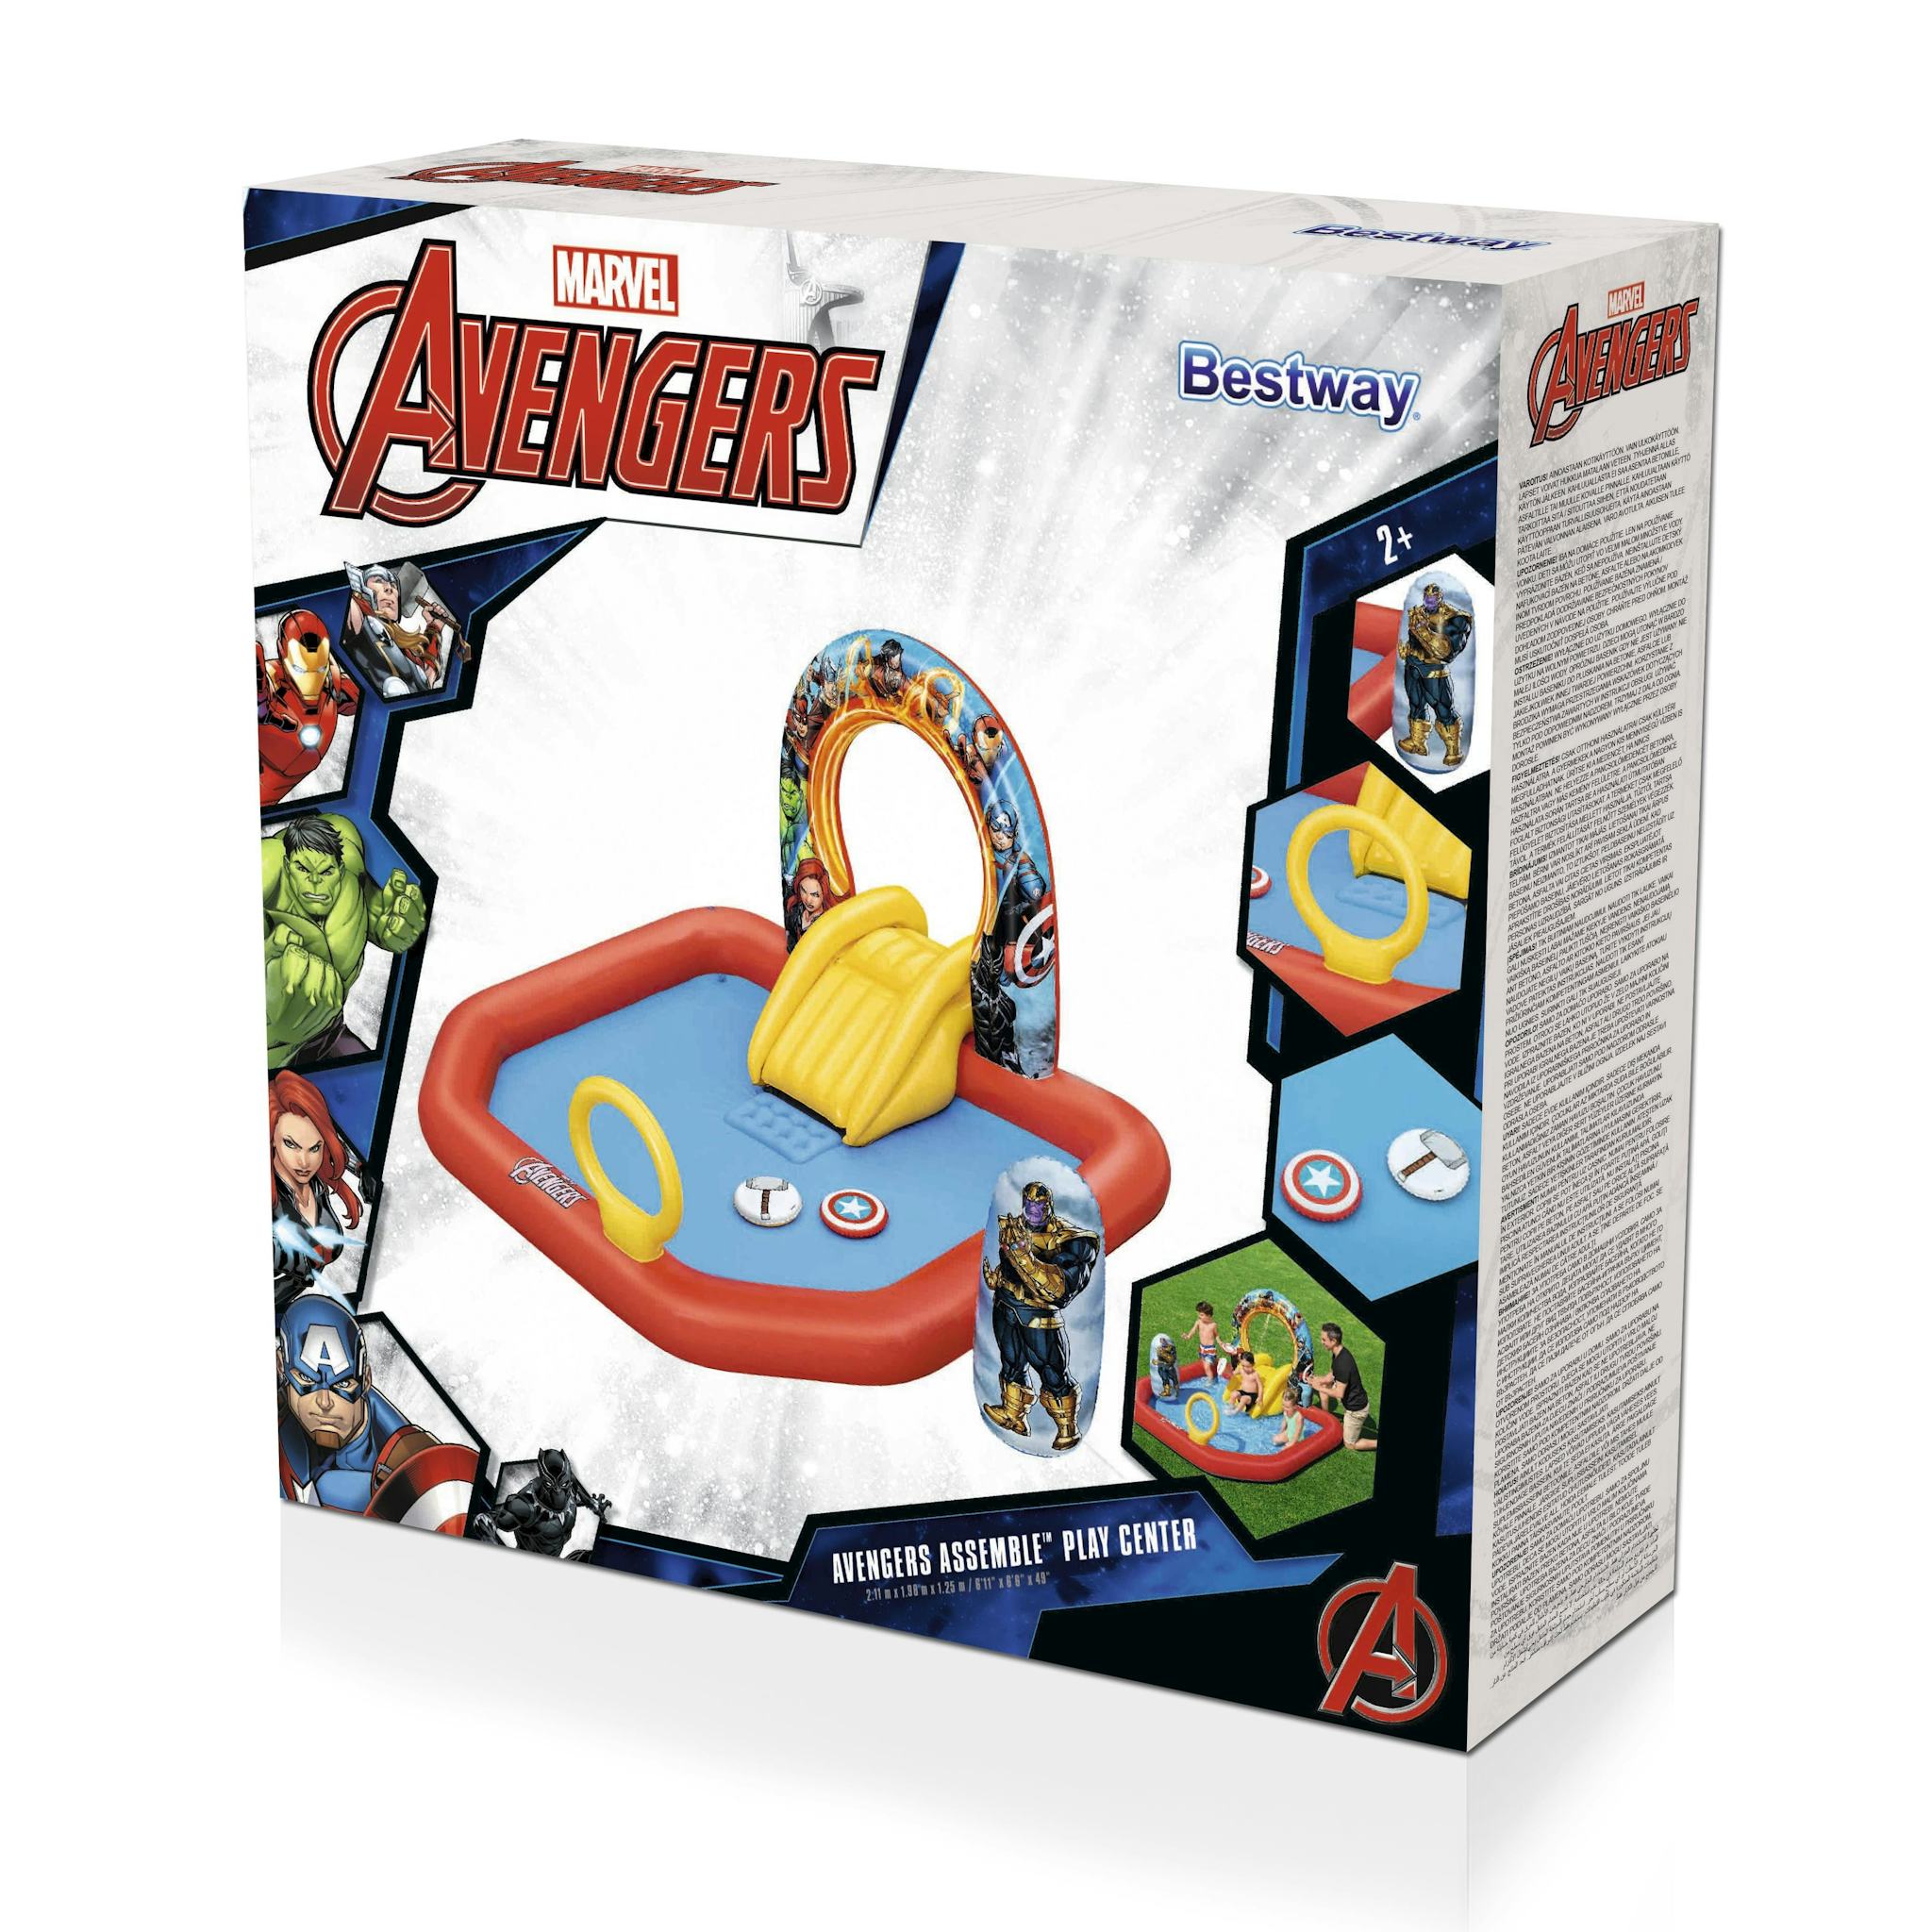 Giochi gonfiabili per bambini Playcenter gonfiabile Avengers Bestway 6